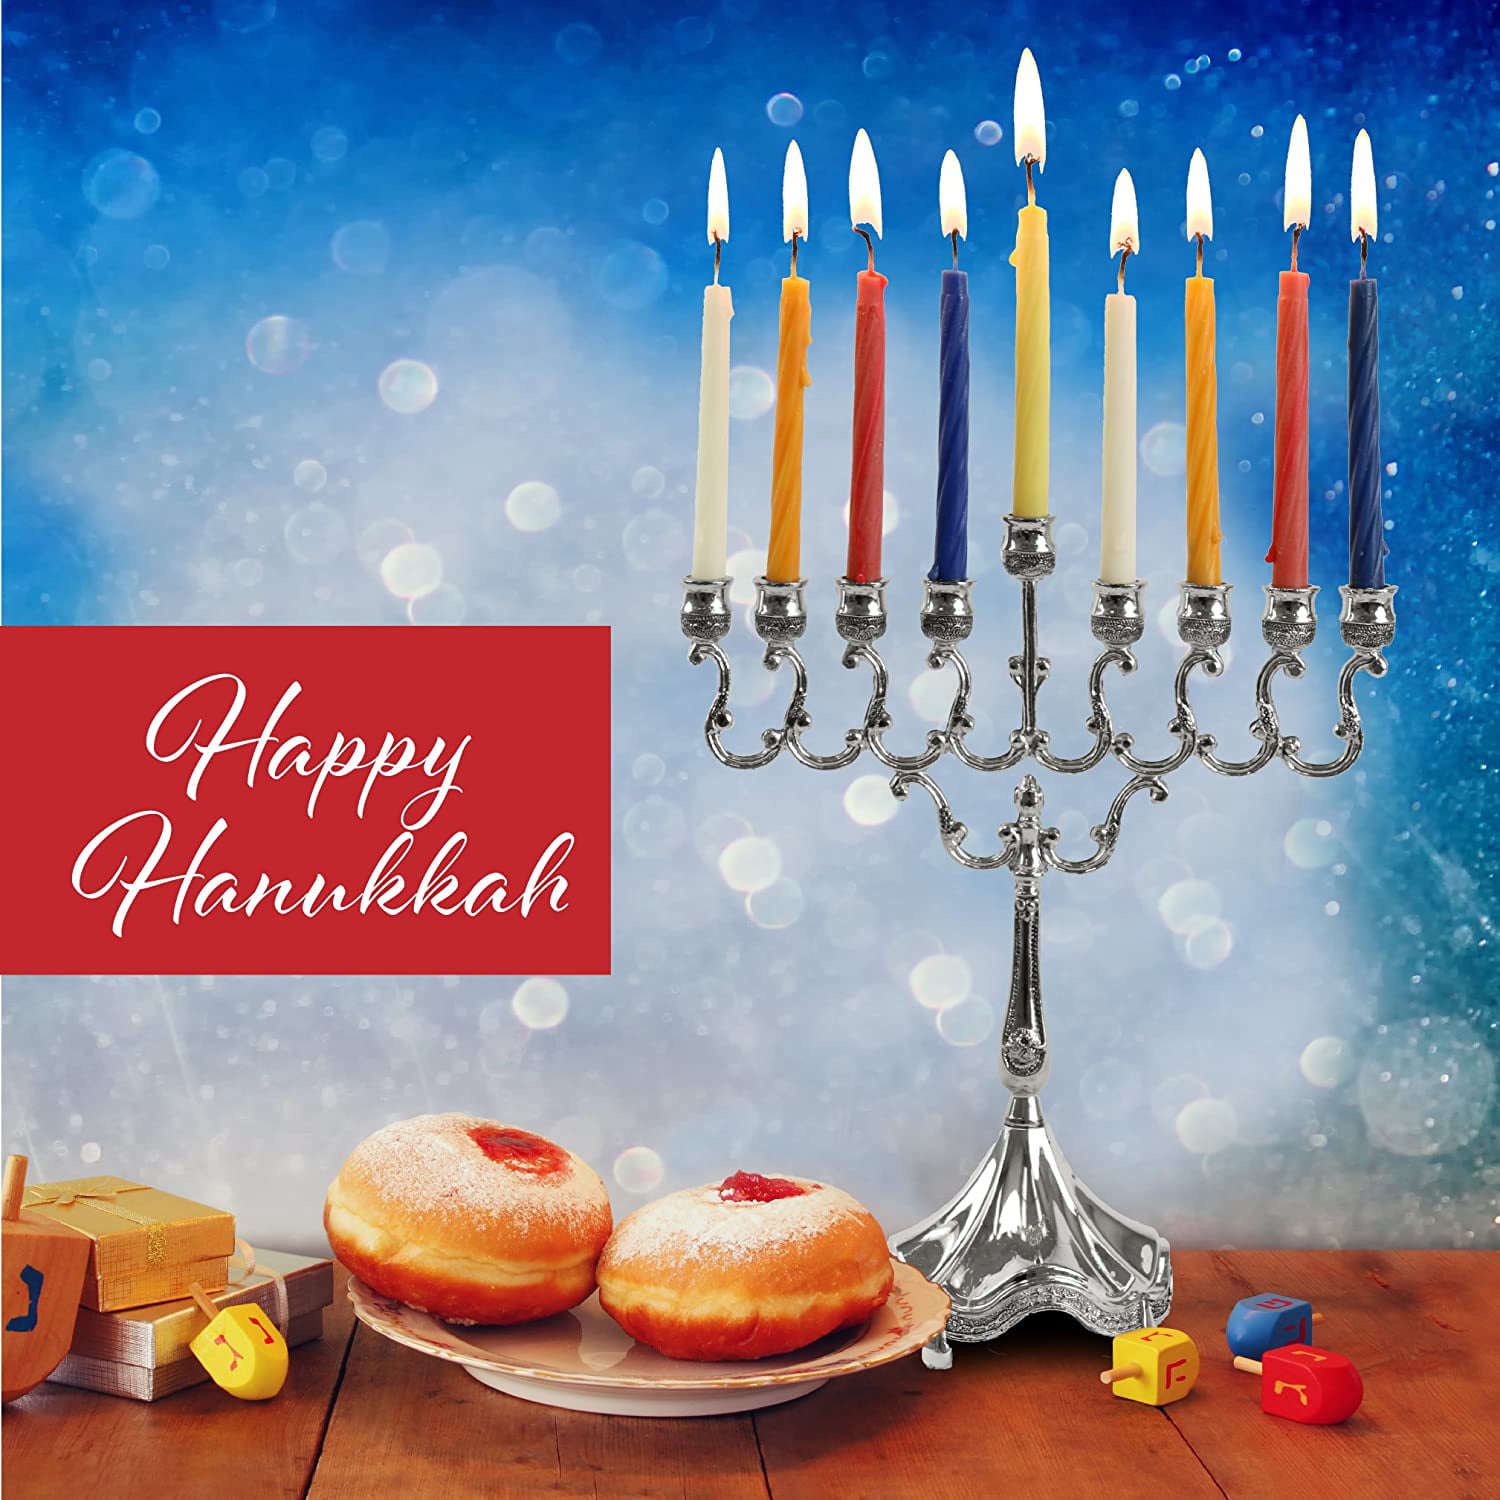 Ner Mitzvah Hanukkah Candles - Multicolor (44 Count)